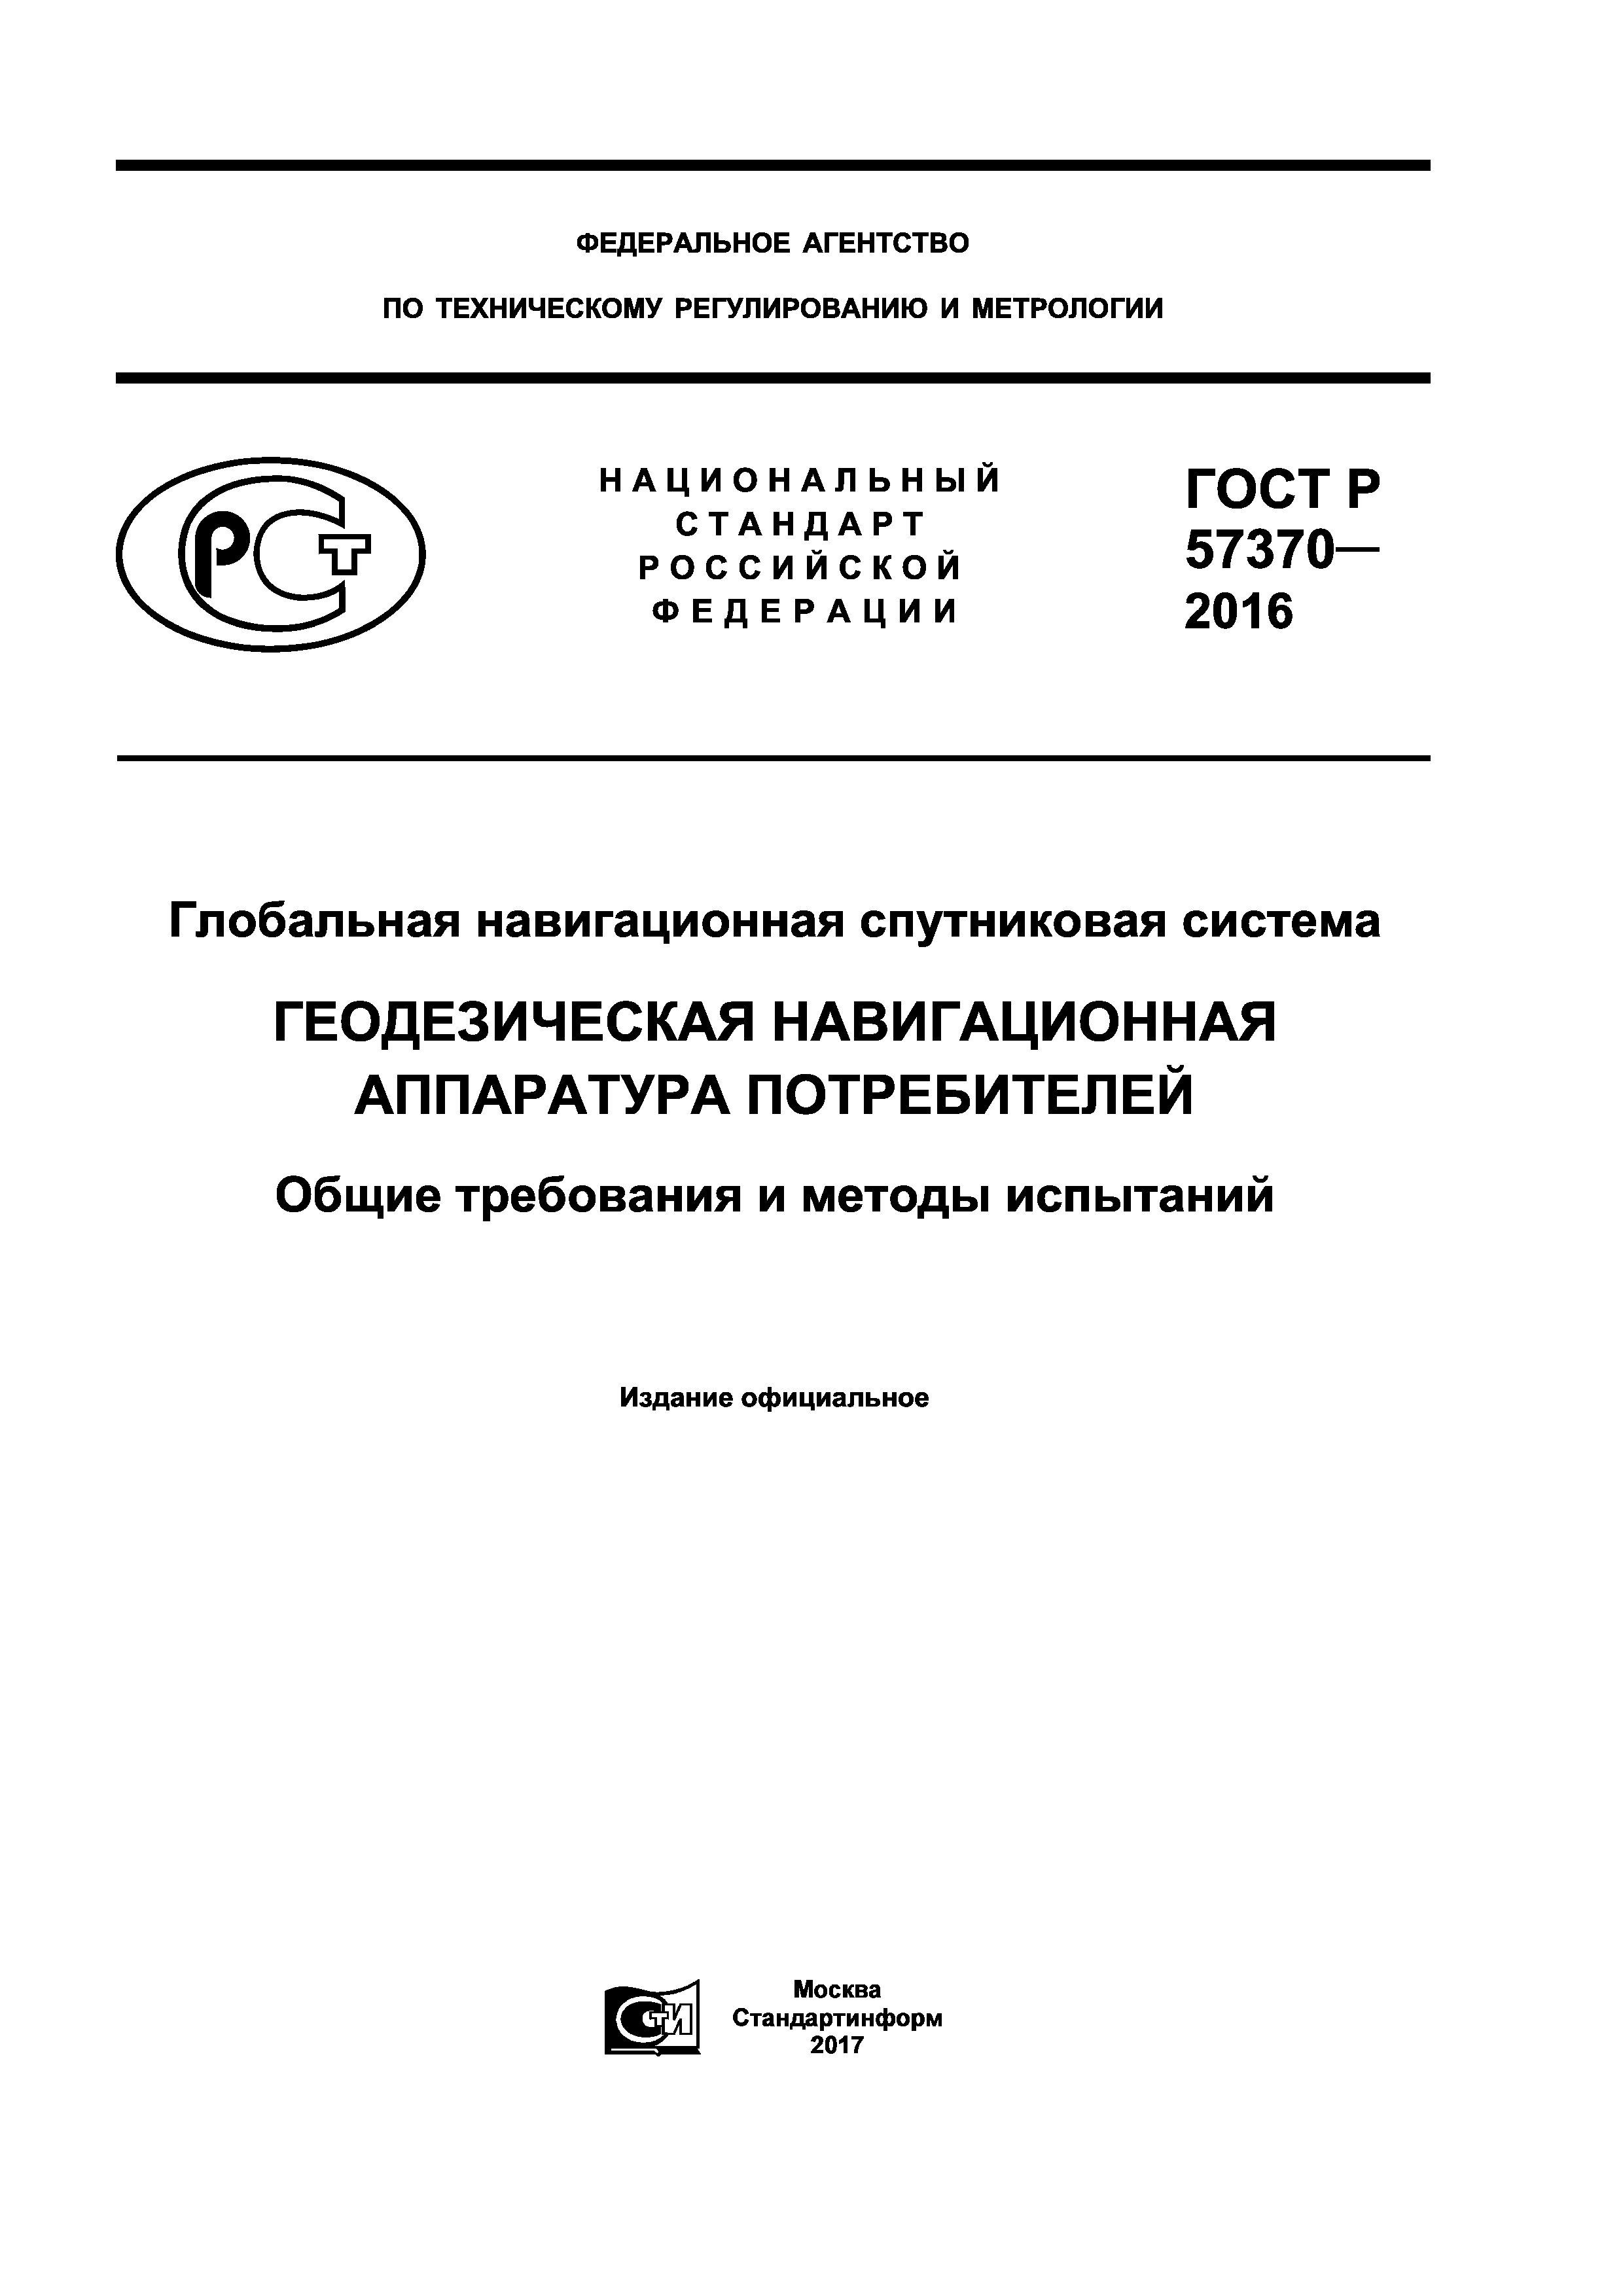 ГОСТ Р 57370-2016